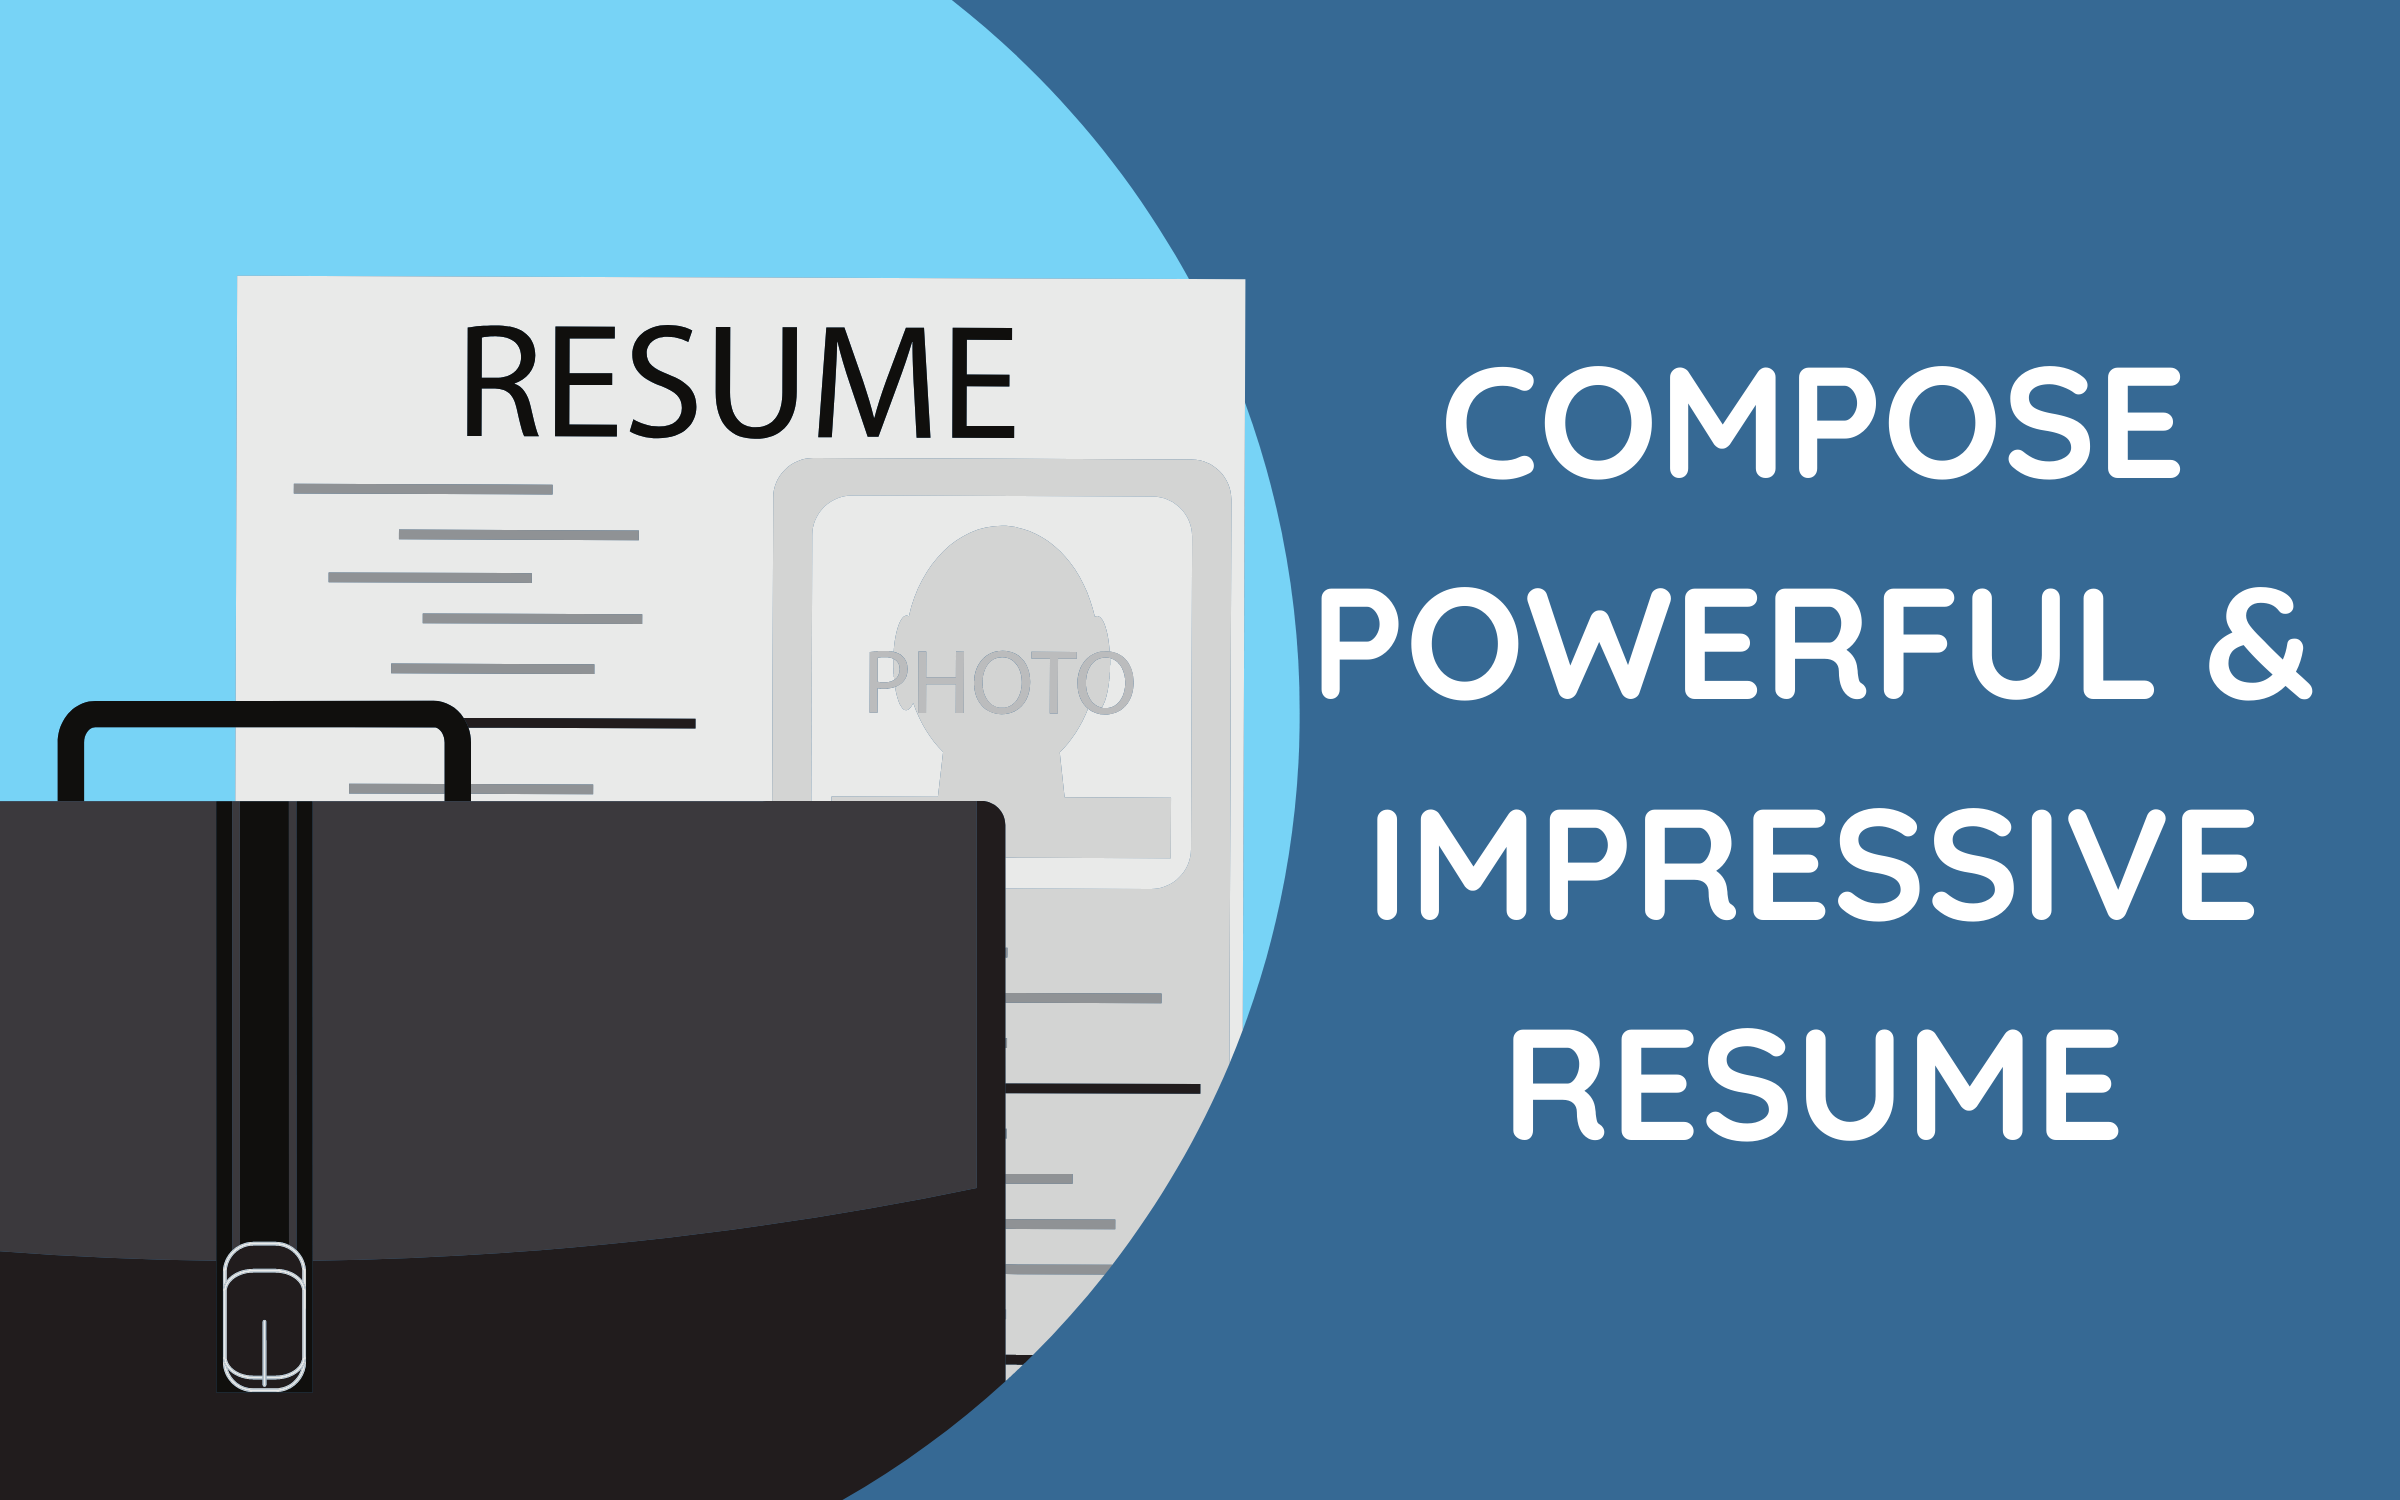 How to compose a powerful & impressive job seeking resume 